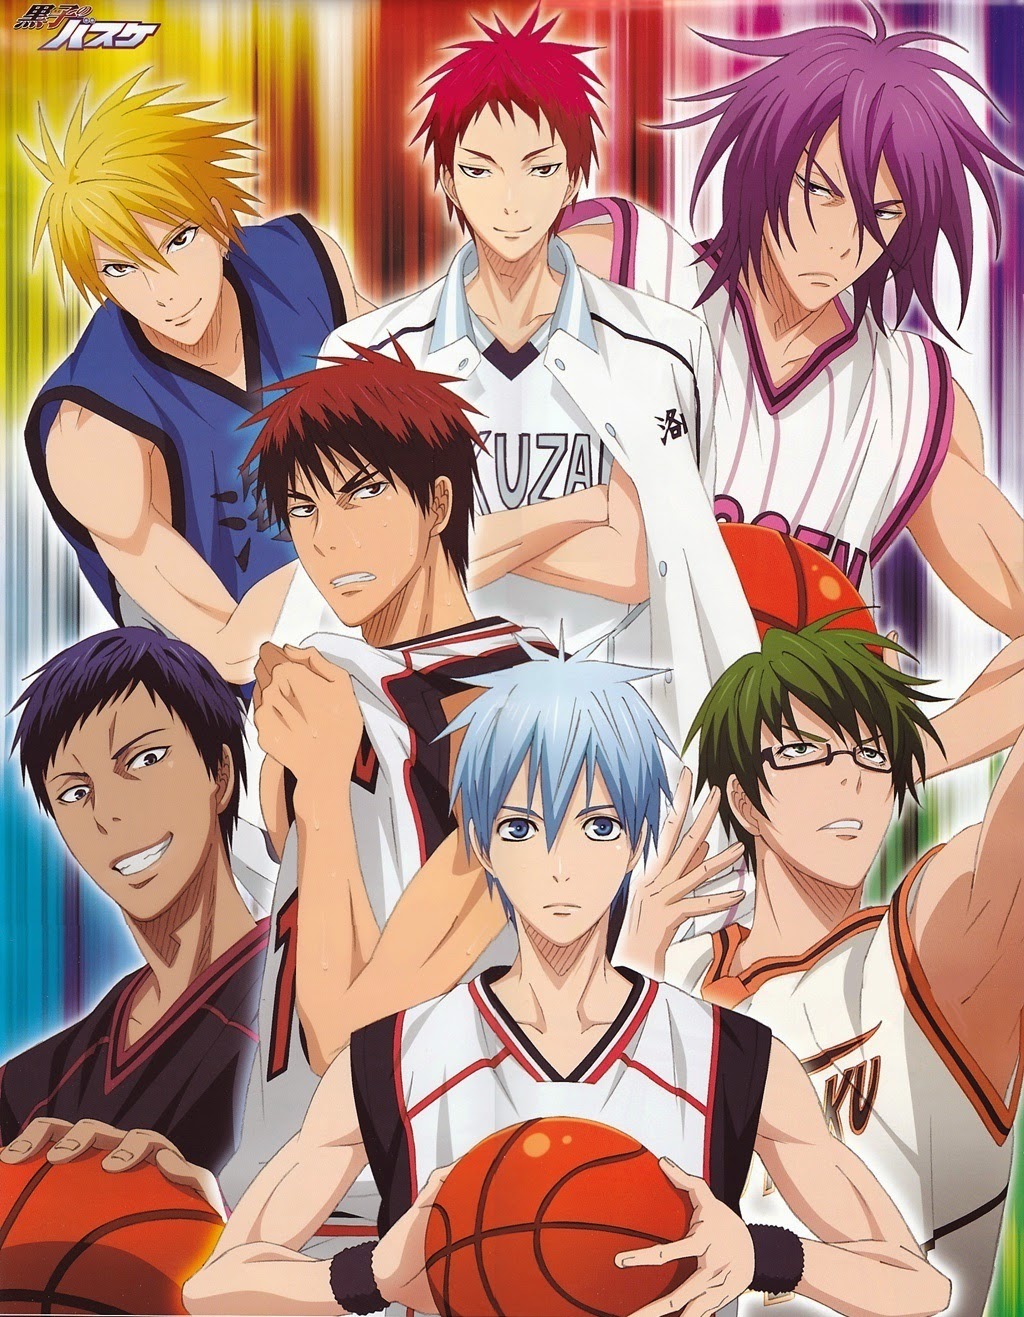 The Best Basketball Anime & Manga, Ranked